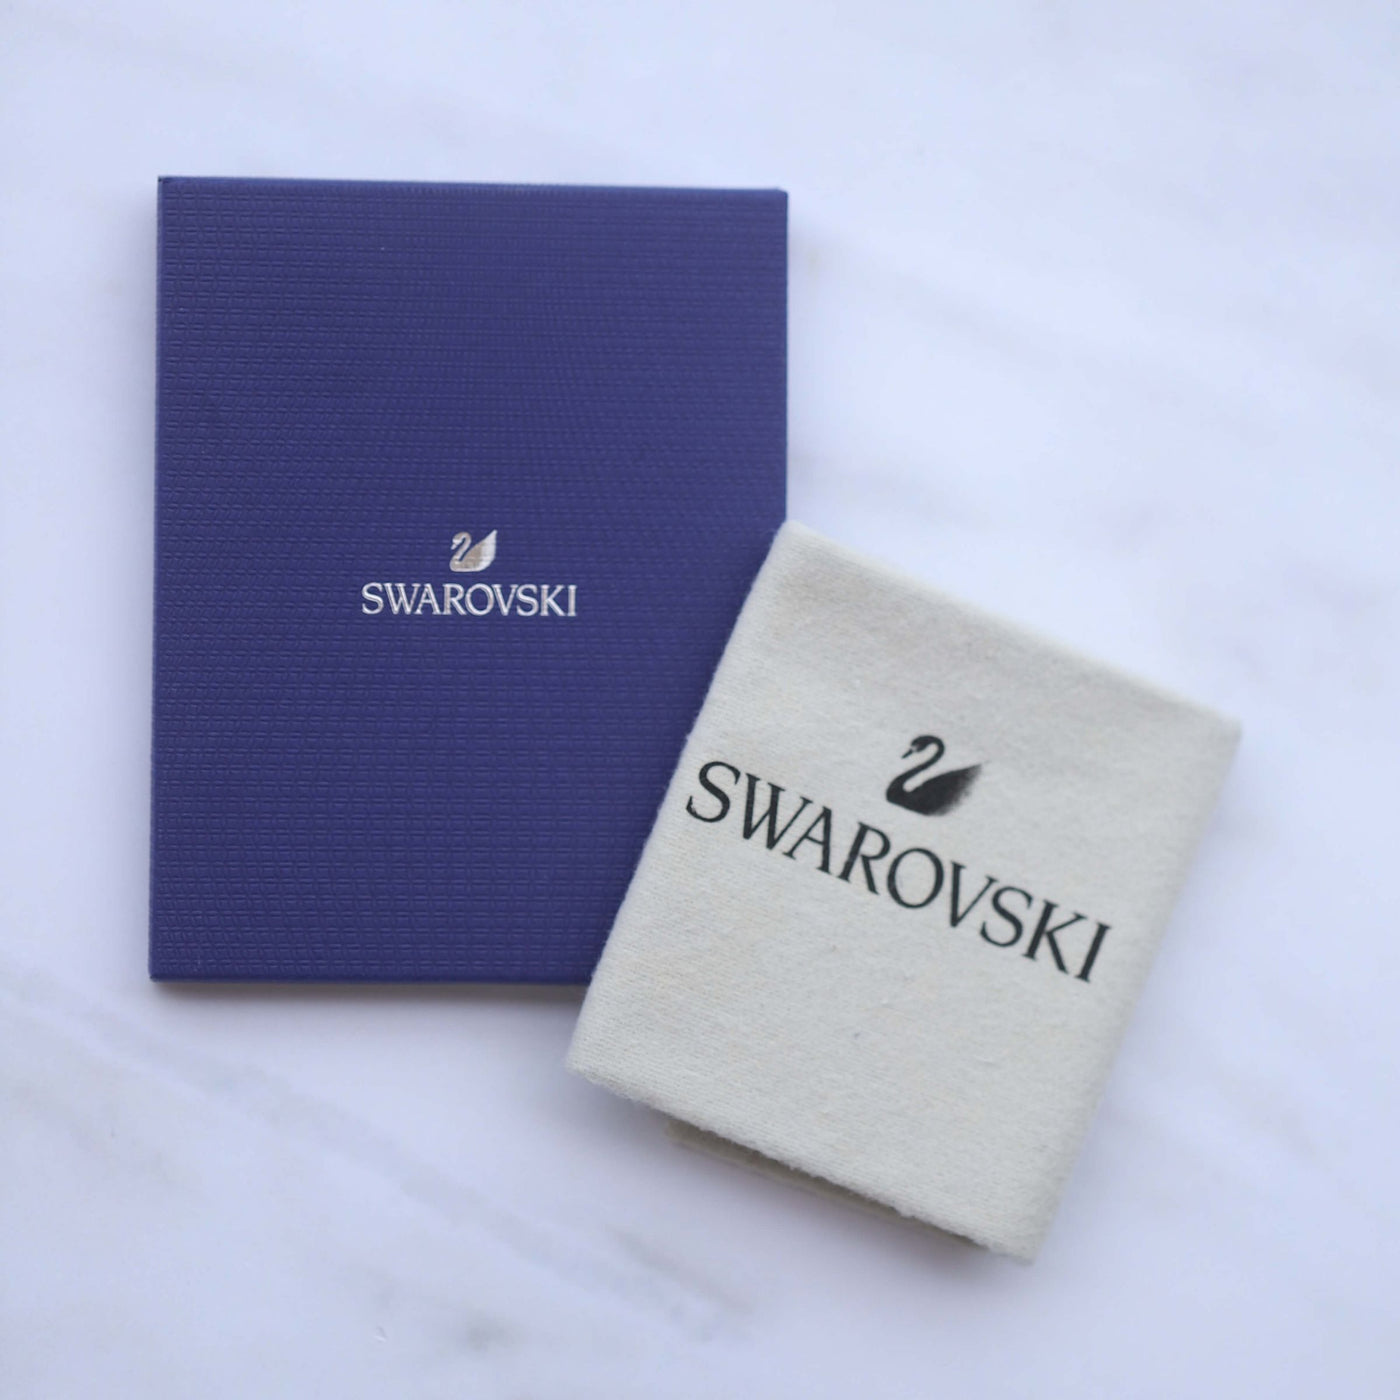 SWAROVSKI מטלית ניקוי מיוחדת לתכשיטים בציפוי מוזהב של סברובסקי